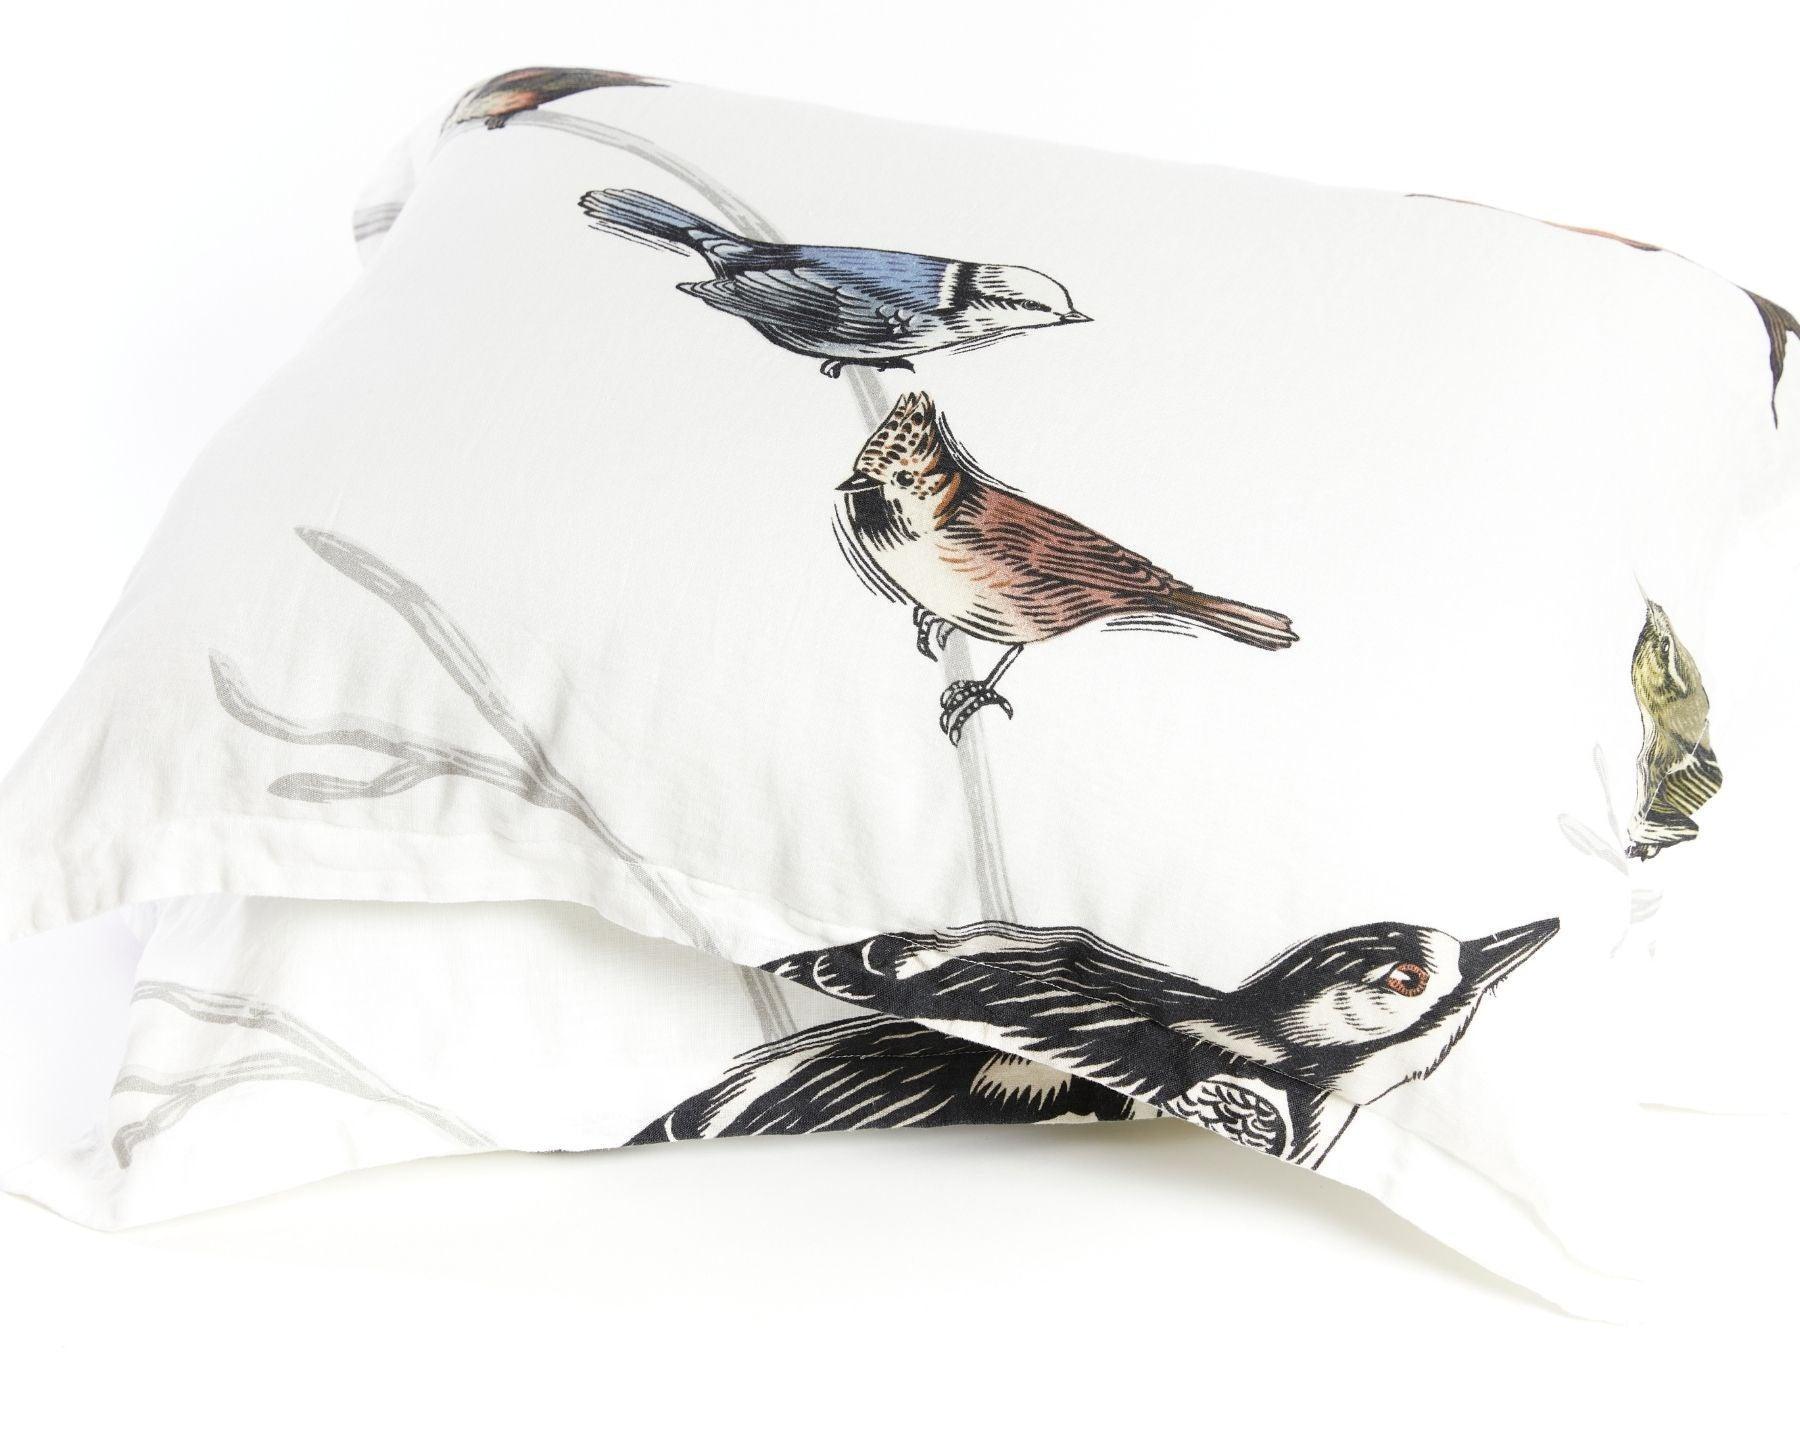 Organic european linen duvet cover set with Scandinavian birds design and chambray grey backside - Twin / Standard, Full/Queen / Standard, King/Cal-King / Standard, King/Cal-King / King